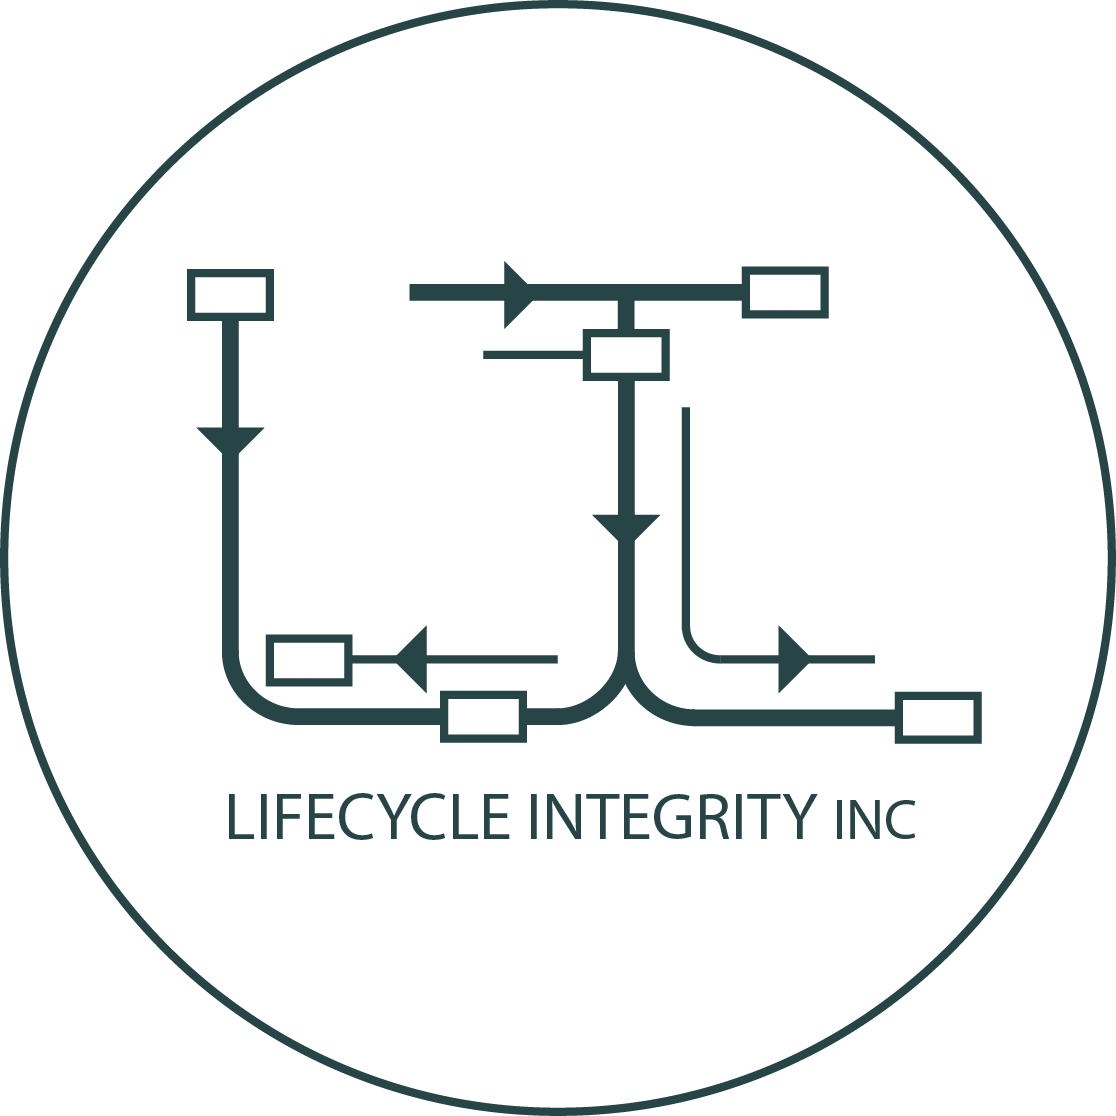 Lifecycle Integrity Inc.